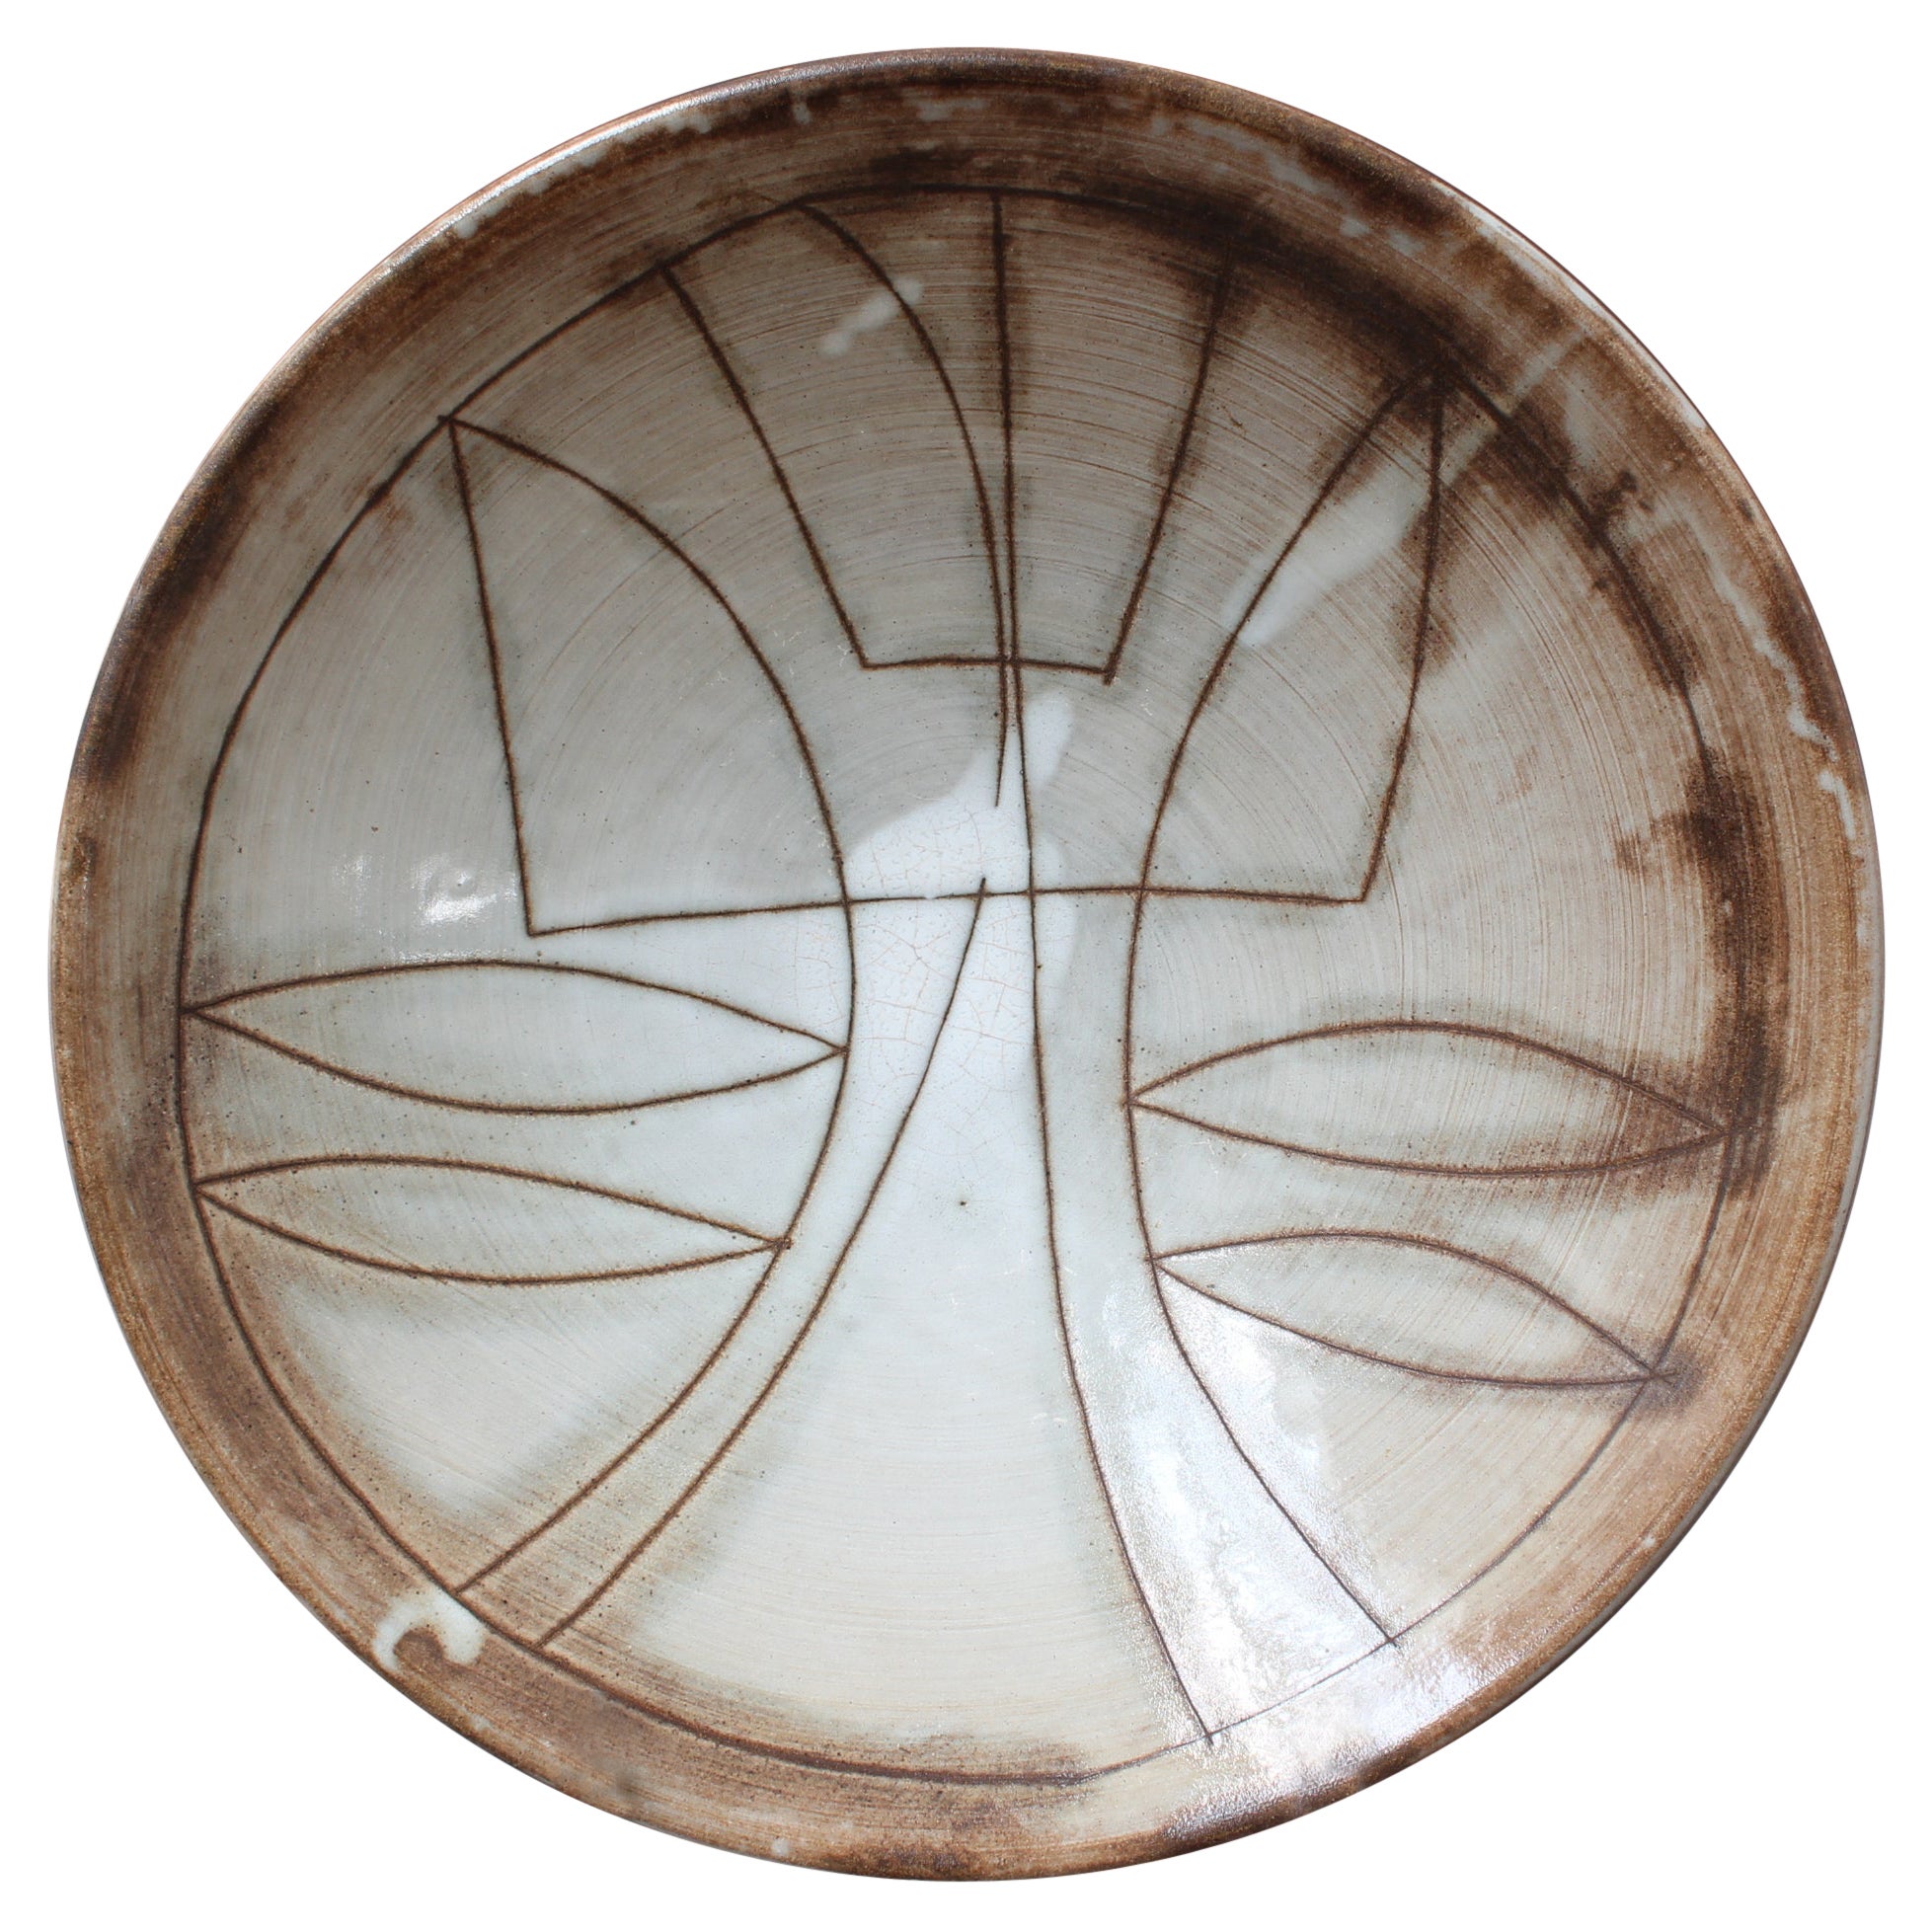 Vintage French Decorative Bowl by Jacques Pouchain for Atelier Dieulefit